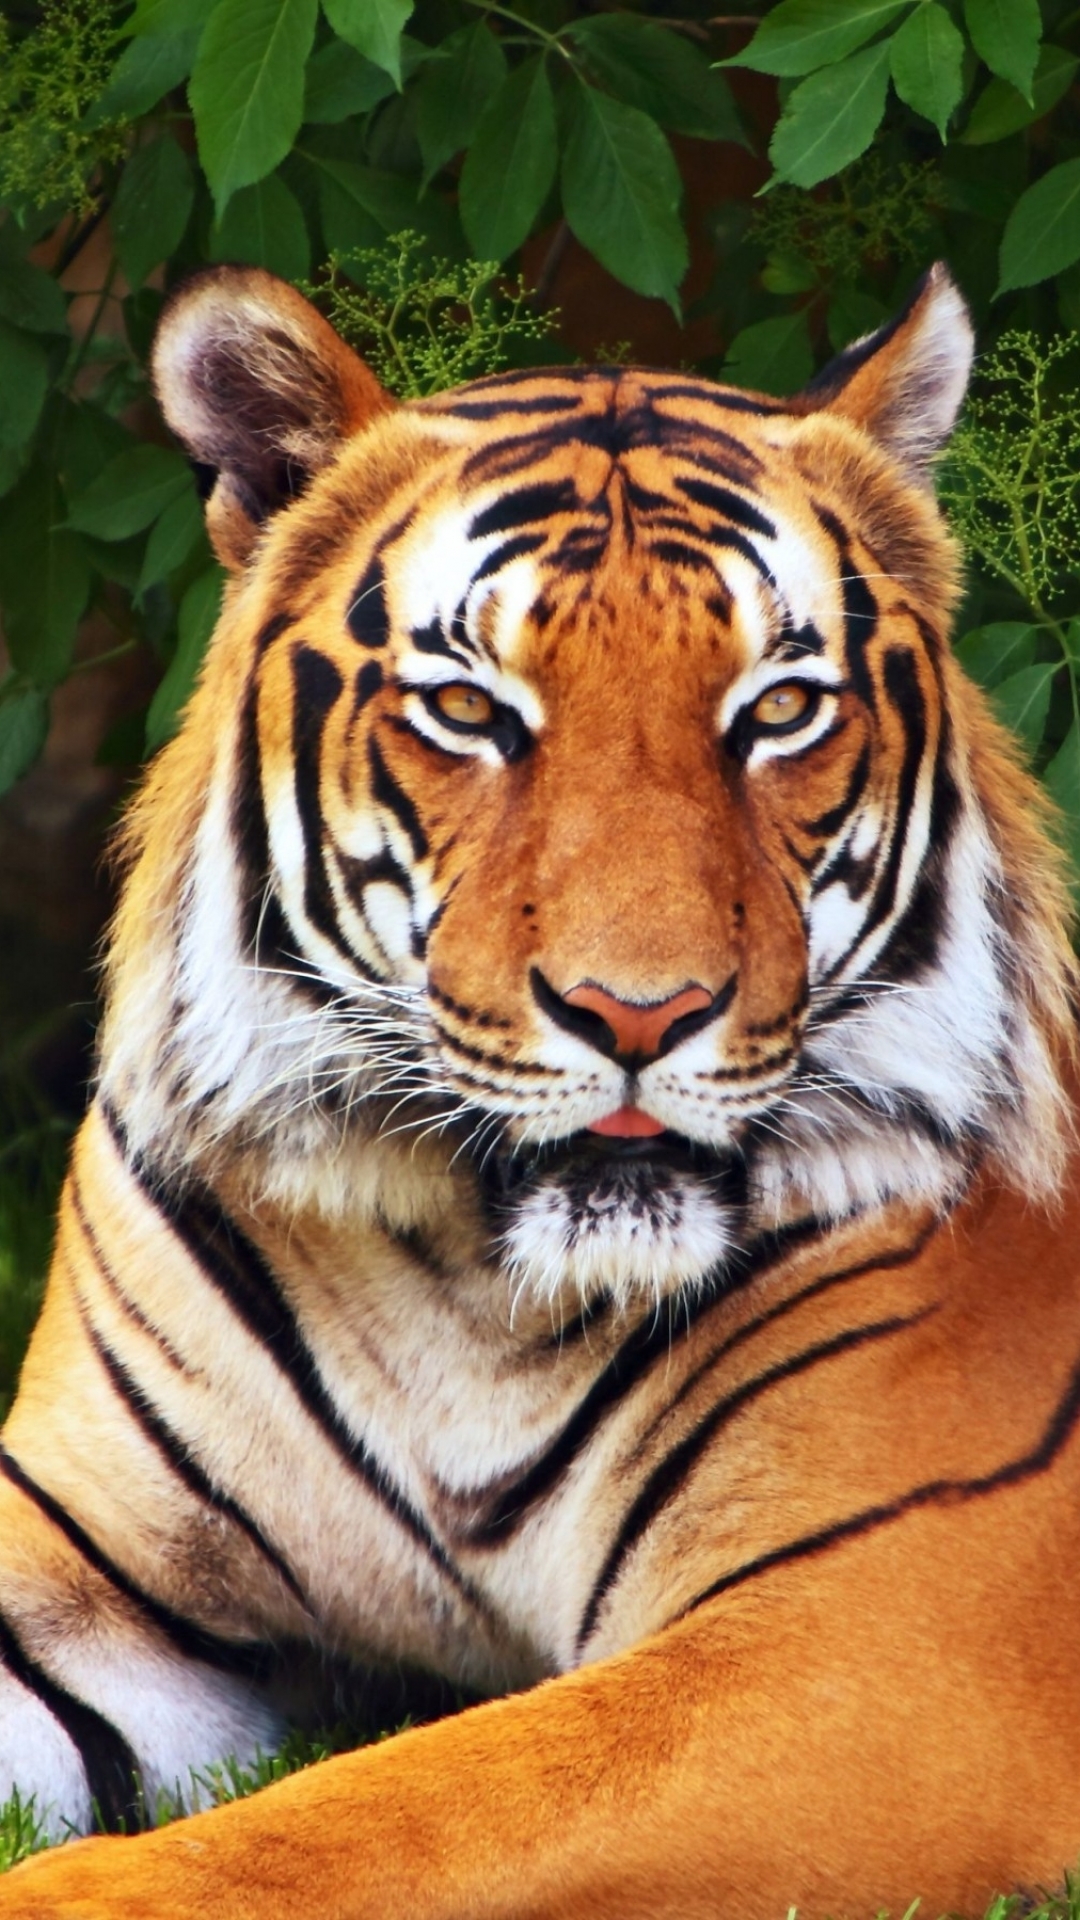 Tiger Pictures Wallpaper - 1080x1920 Wallpaper 